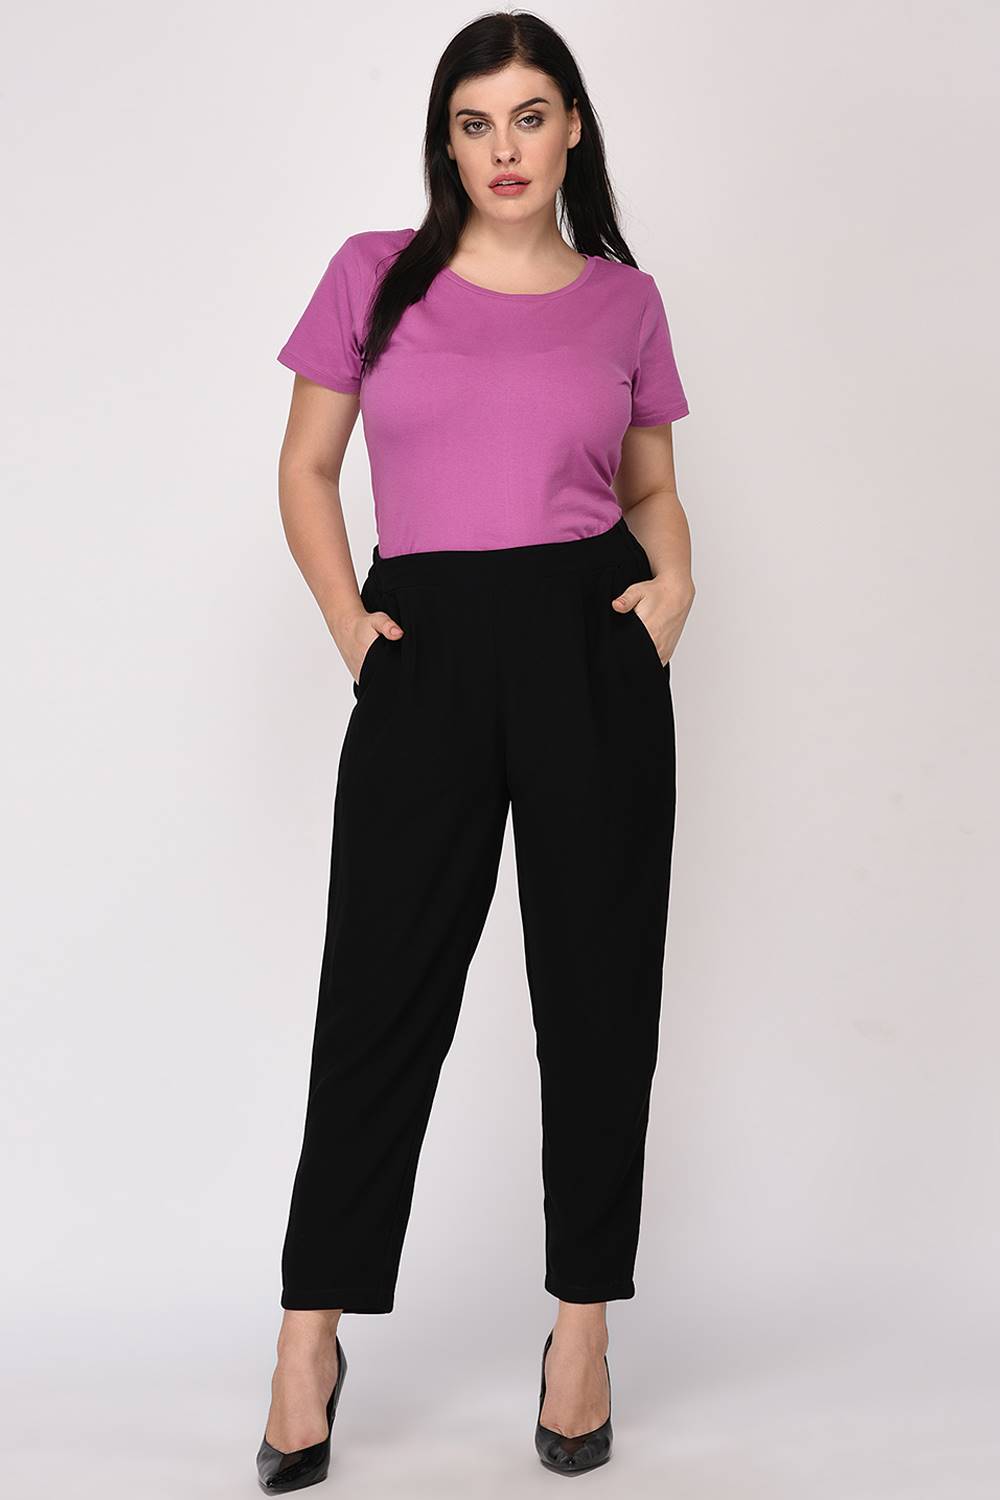 Buy Black Trousers  Pants for Women by Amydus Online  Ajiocom